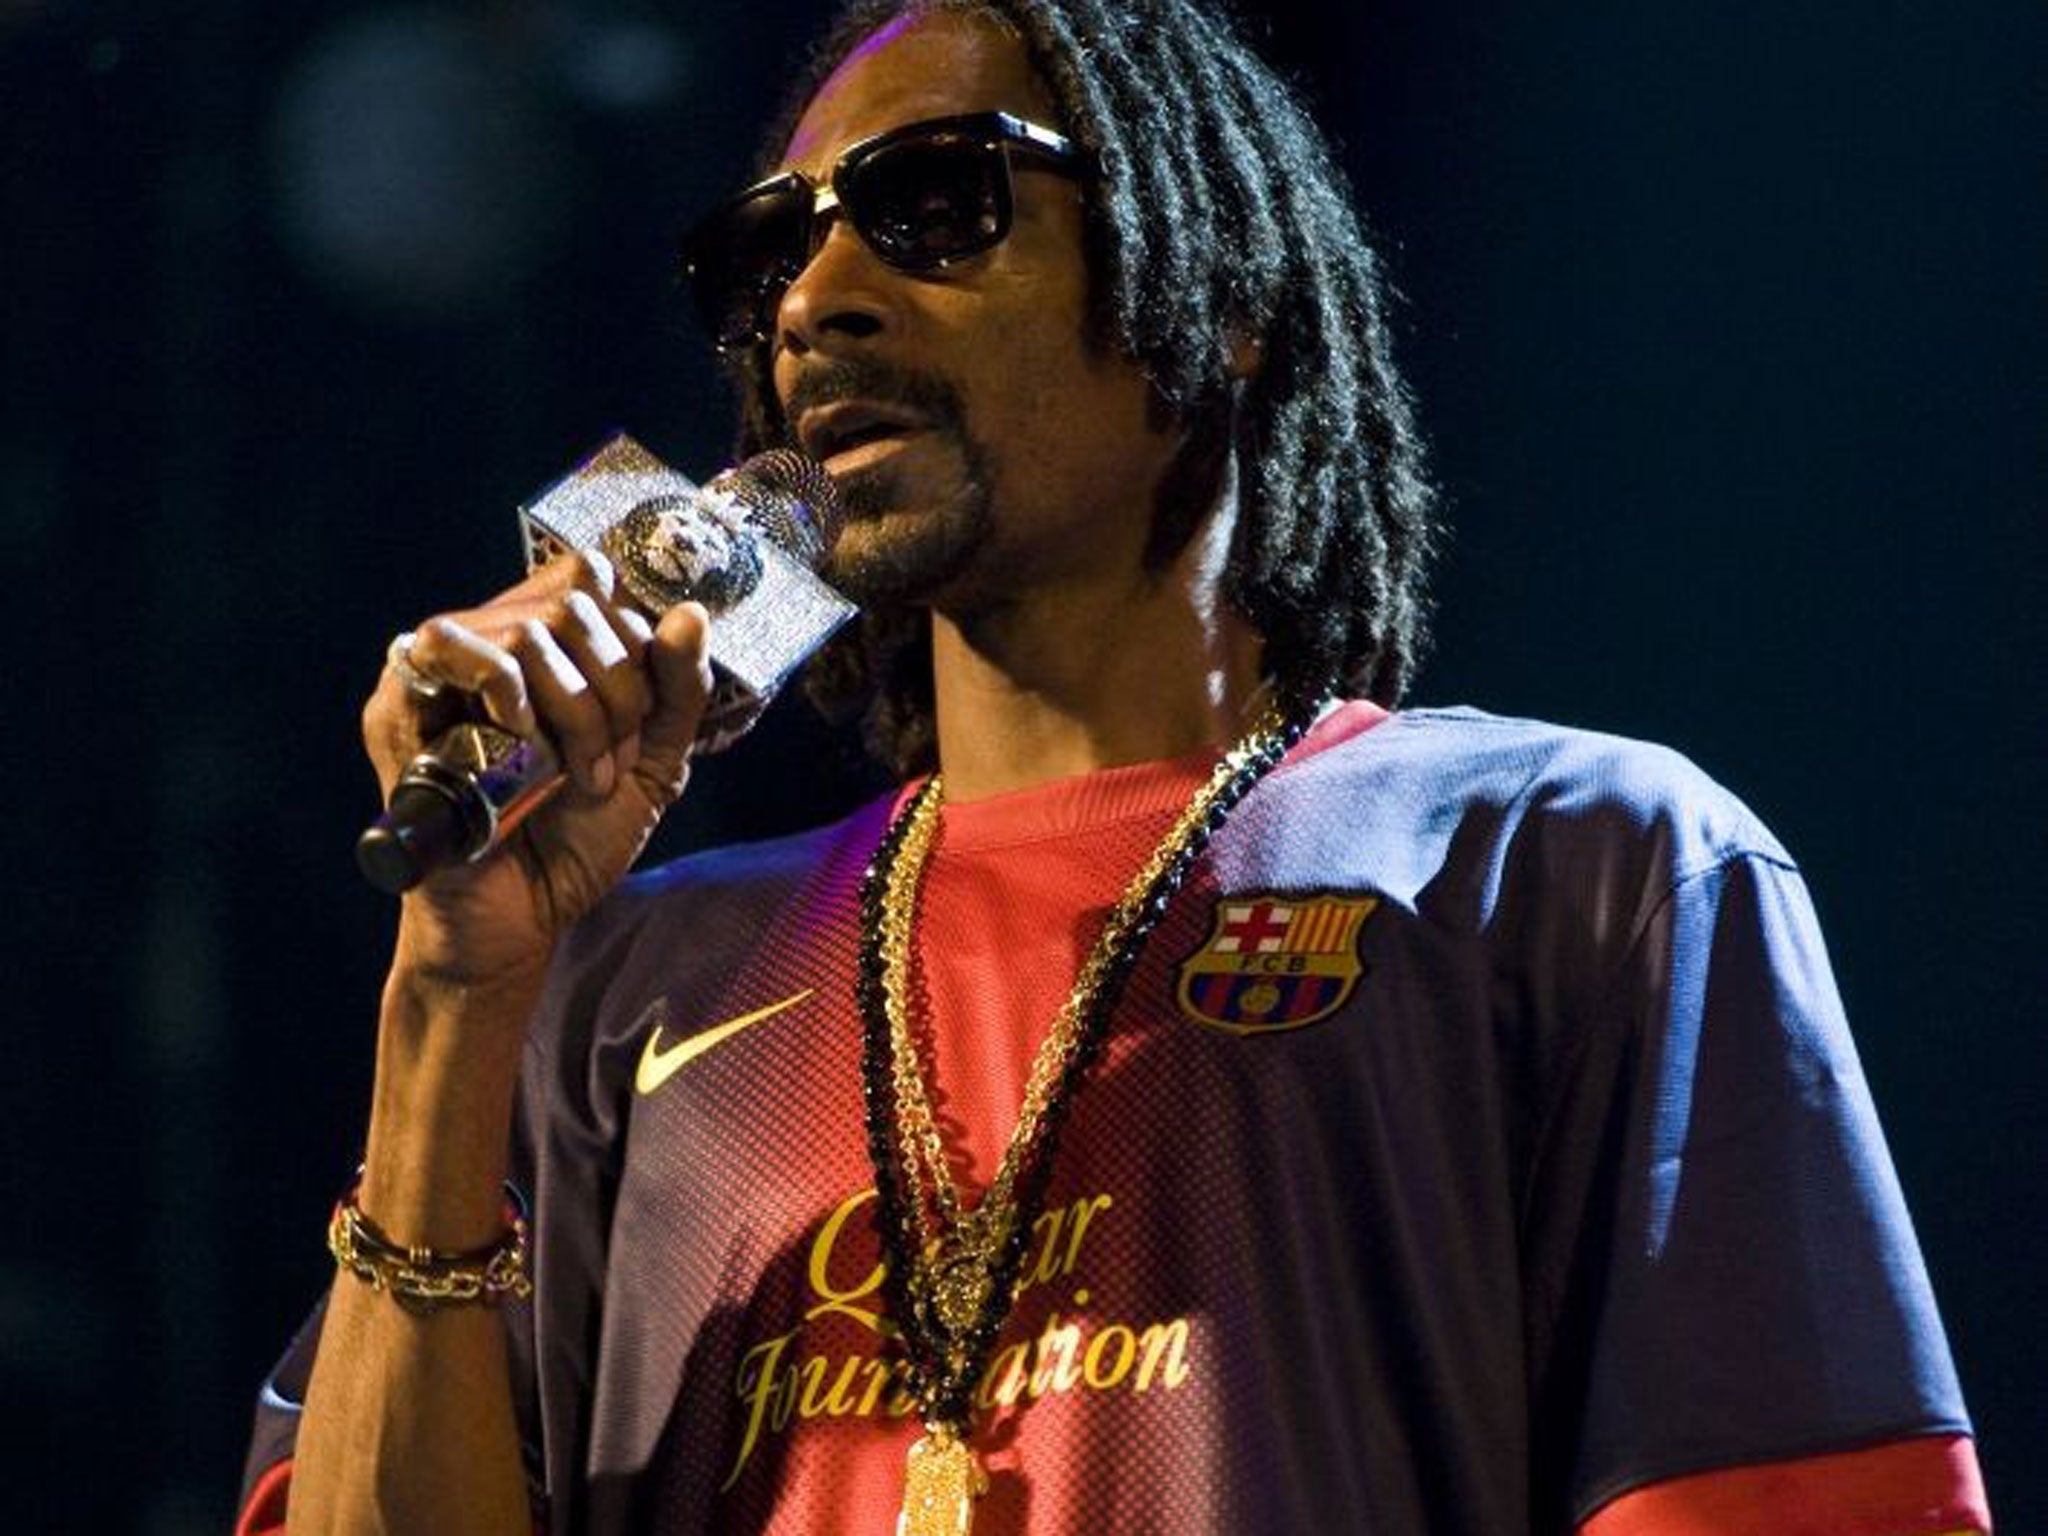 Snoop Dogg is an avid supporter of marijuana legalisation